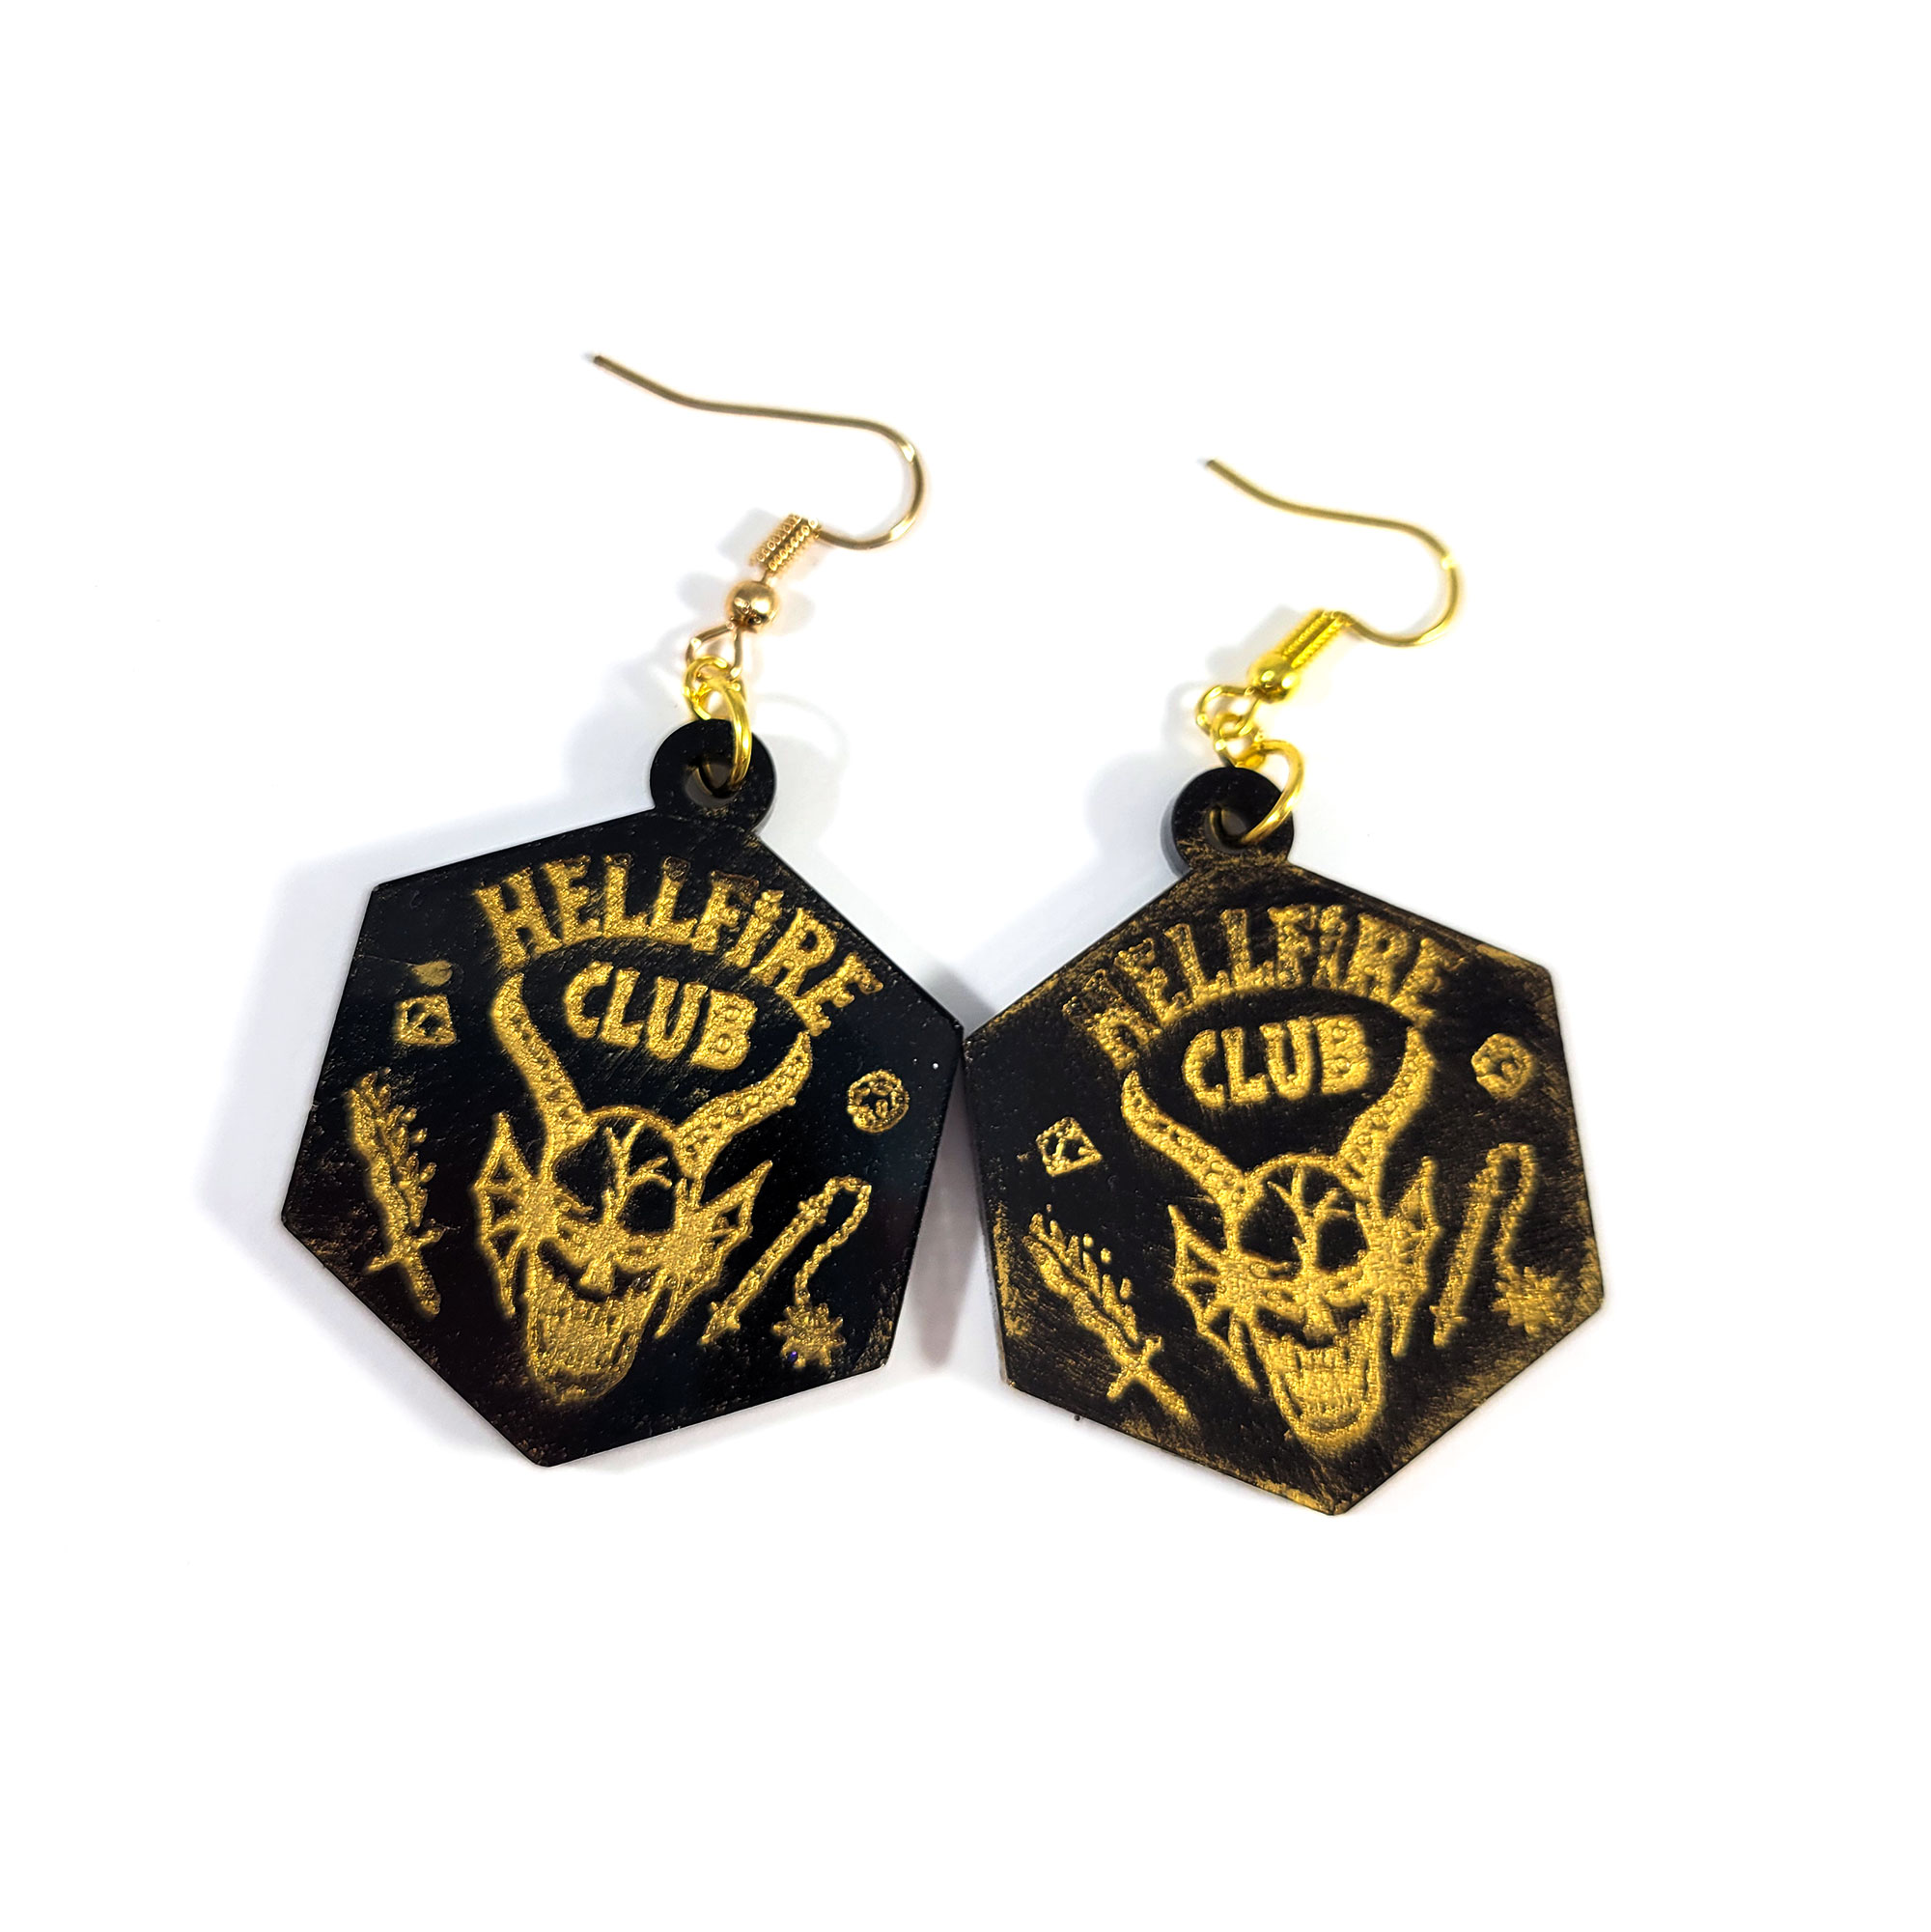 Black & Gold D&D Club Earrings by Wilde Designs